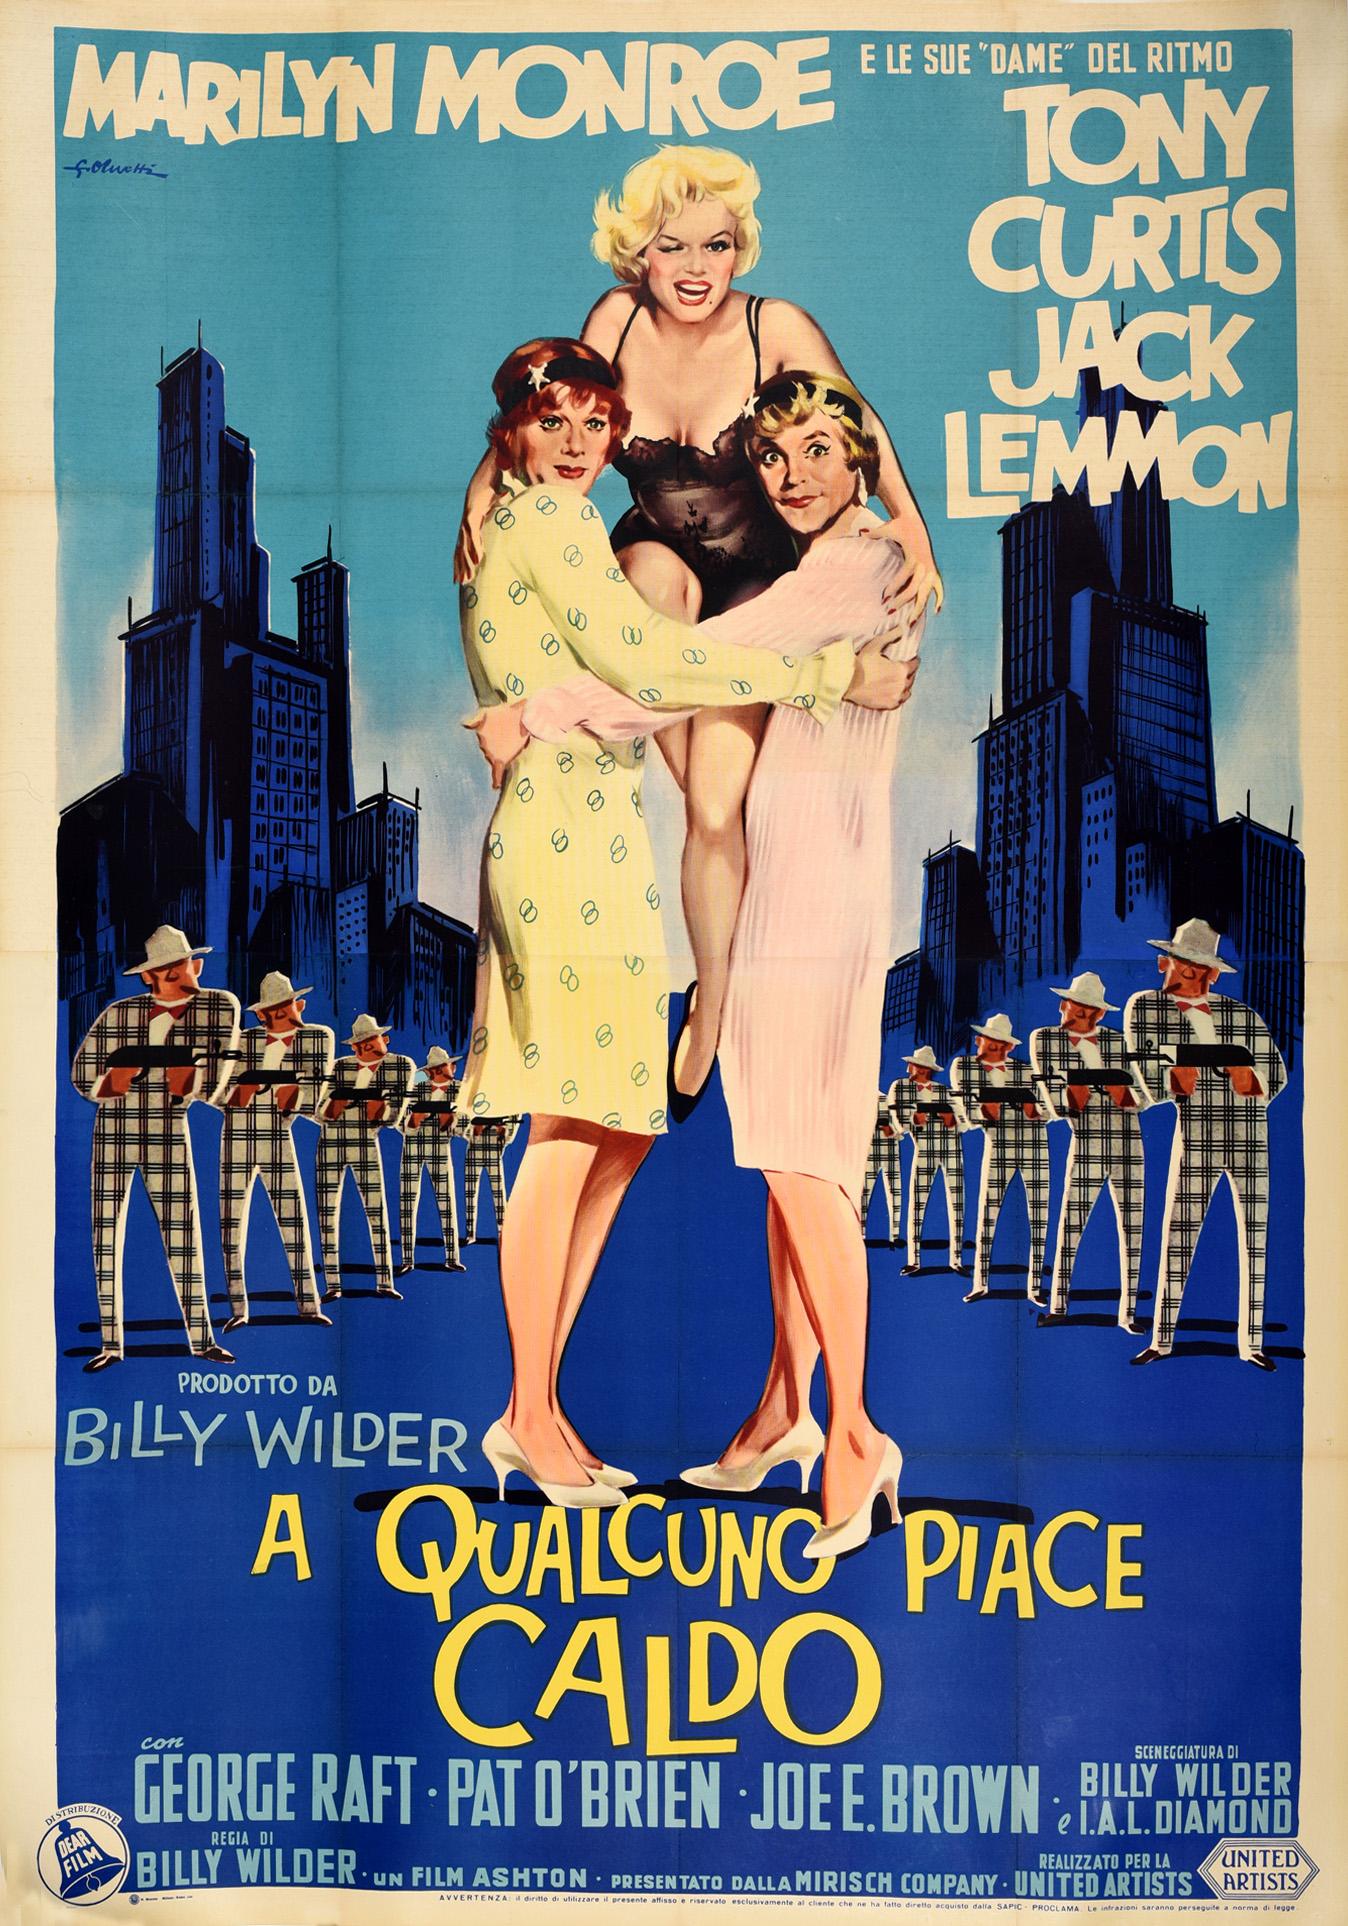 Giorgio Olivetti Print - Large Original Vintage Movie Poster For Some Like It Hot Marilyn Monroe Film Art